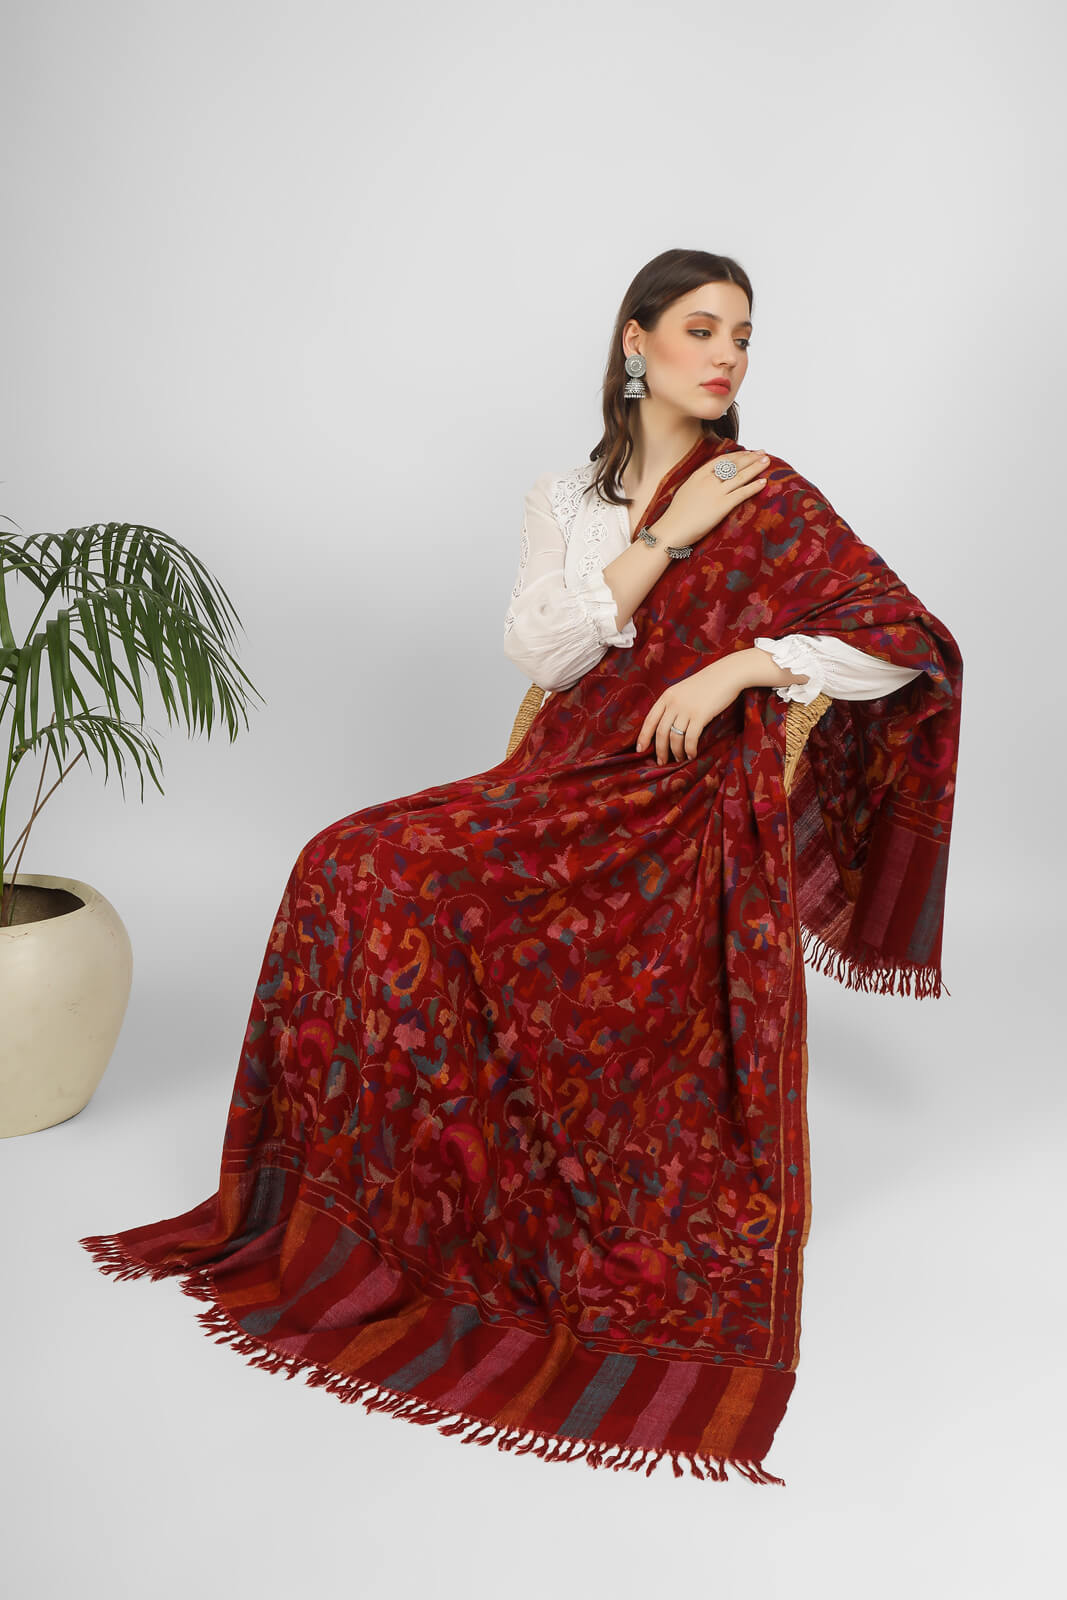 "KANI SHAWLS - Explore the Elegance of Maroon Kani Shawl, Skillfully Woven Florals and Nature's Colors in Splendid Kani Weave." LONDON - DELHI- KASHMIR - ONLINE